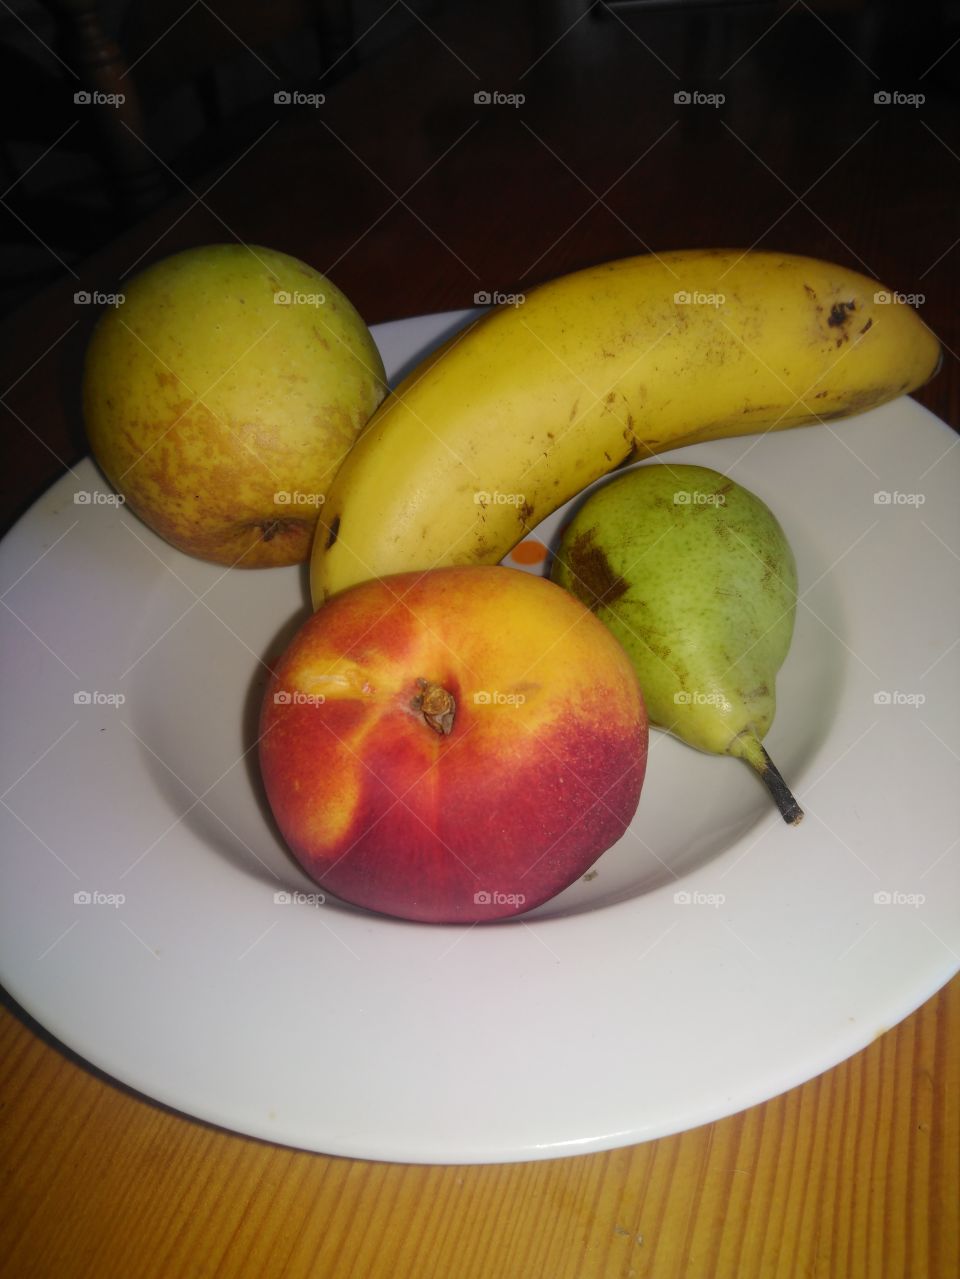 Fruta saludable